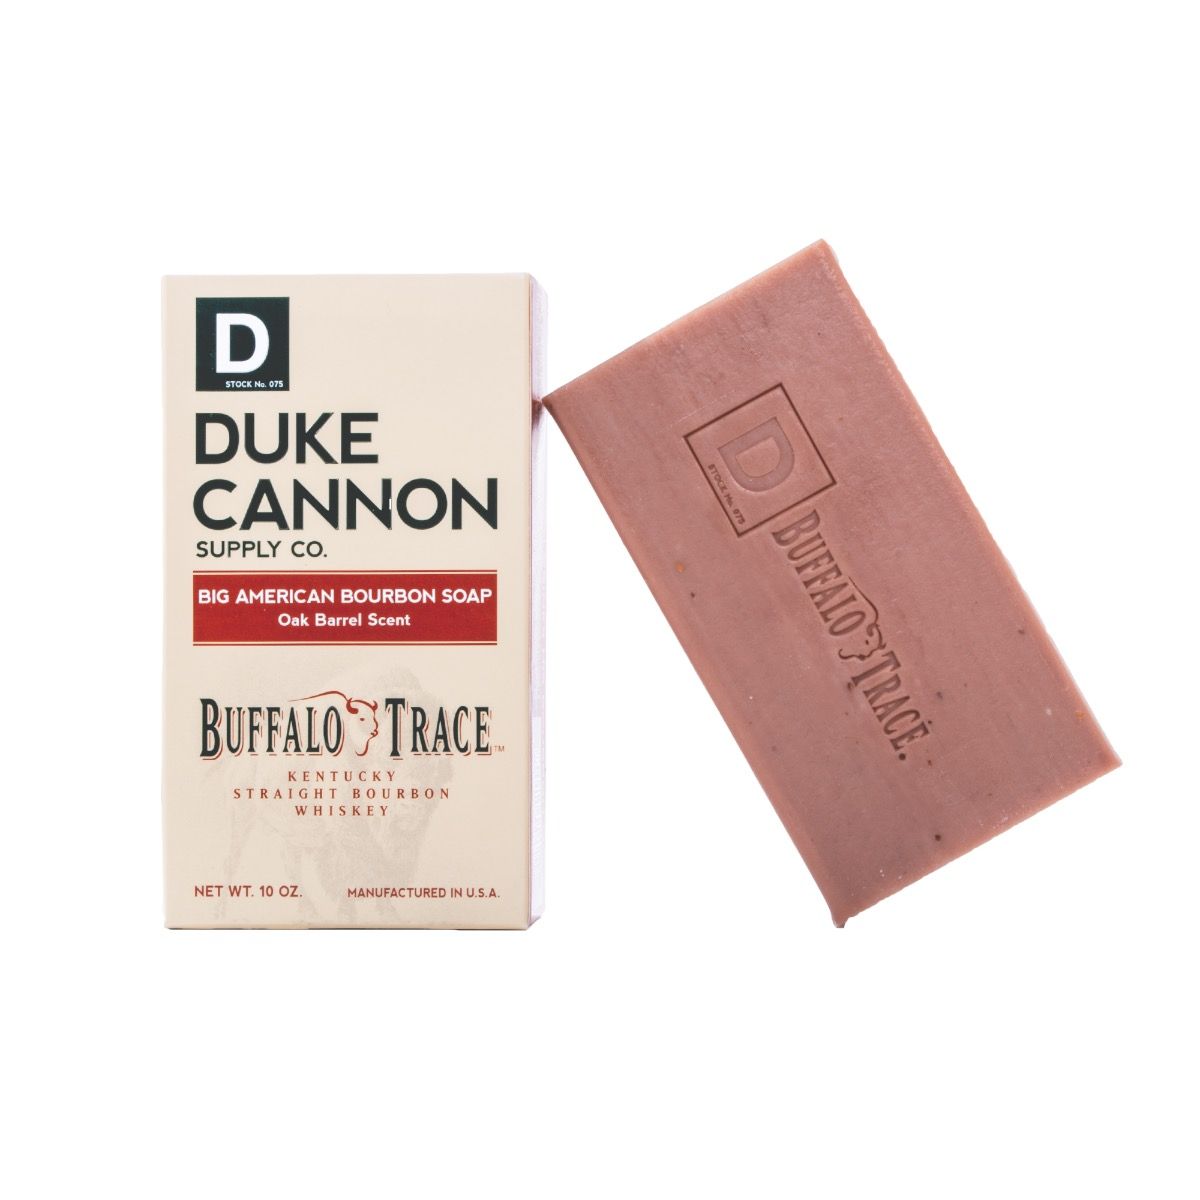 Men's Grooming - Duke Cannon - Big American Bourbon Soap